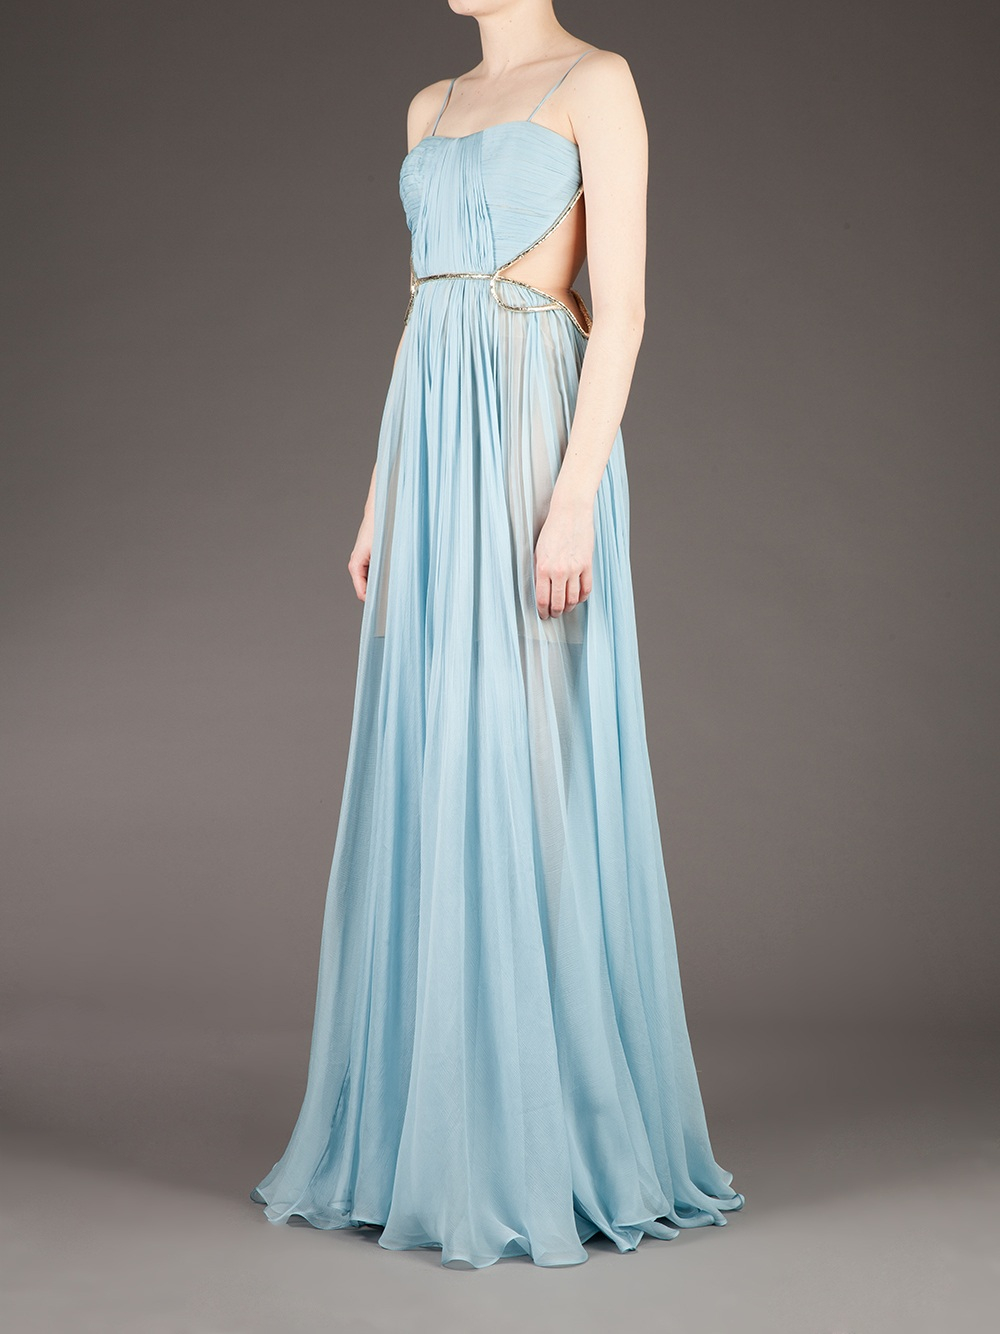 Lyst - Maria Lucia Hohan 'Imogen' Dress in Blue